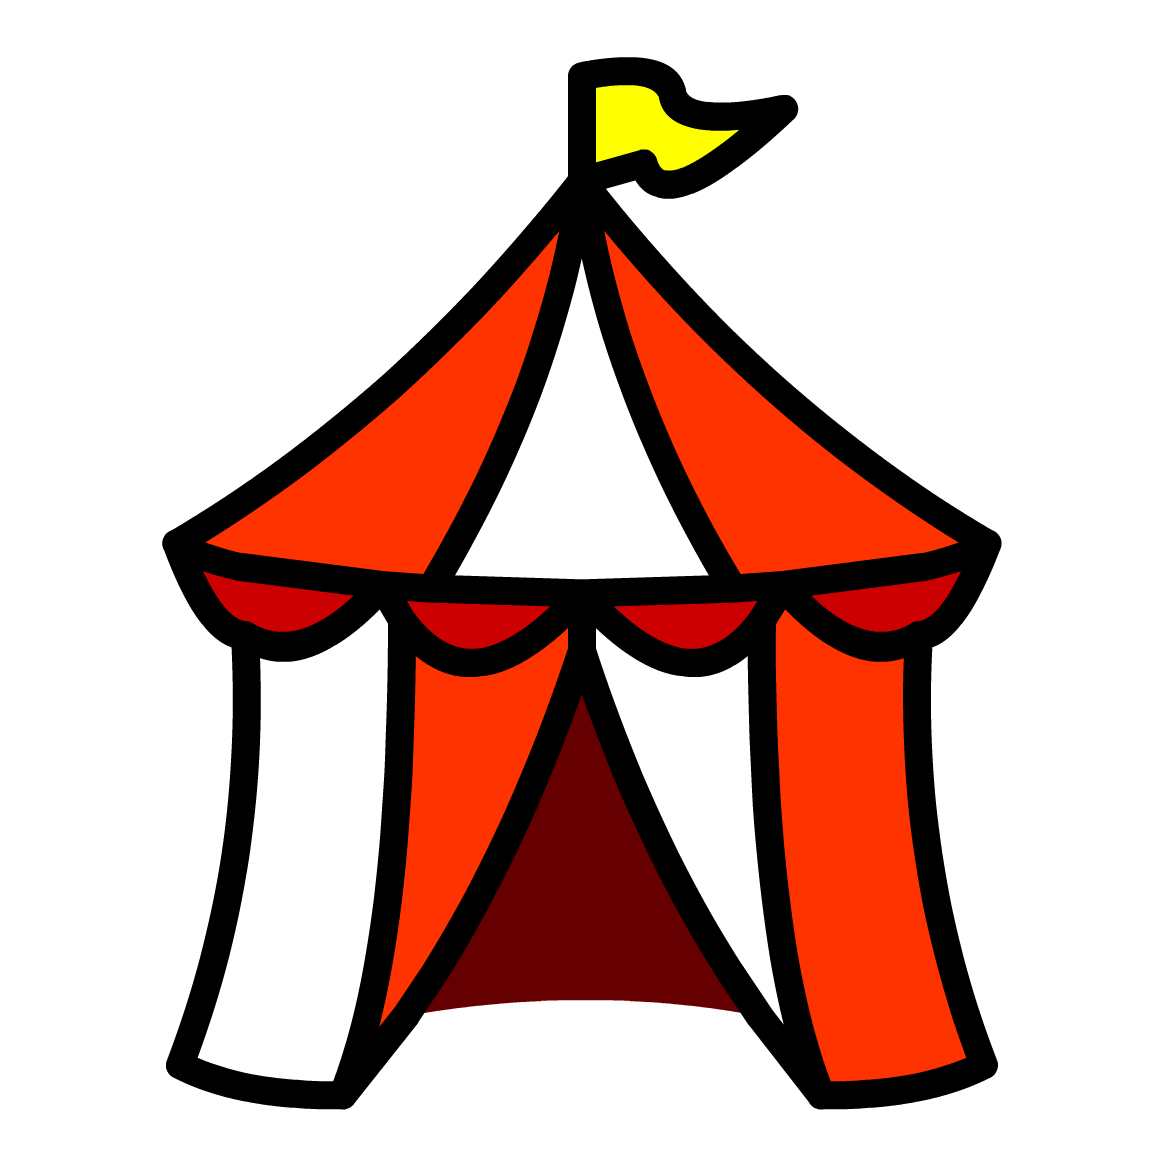 Circus Tent Clip Art - Tumundografico